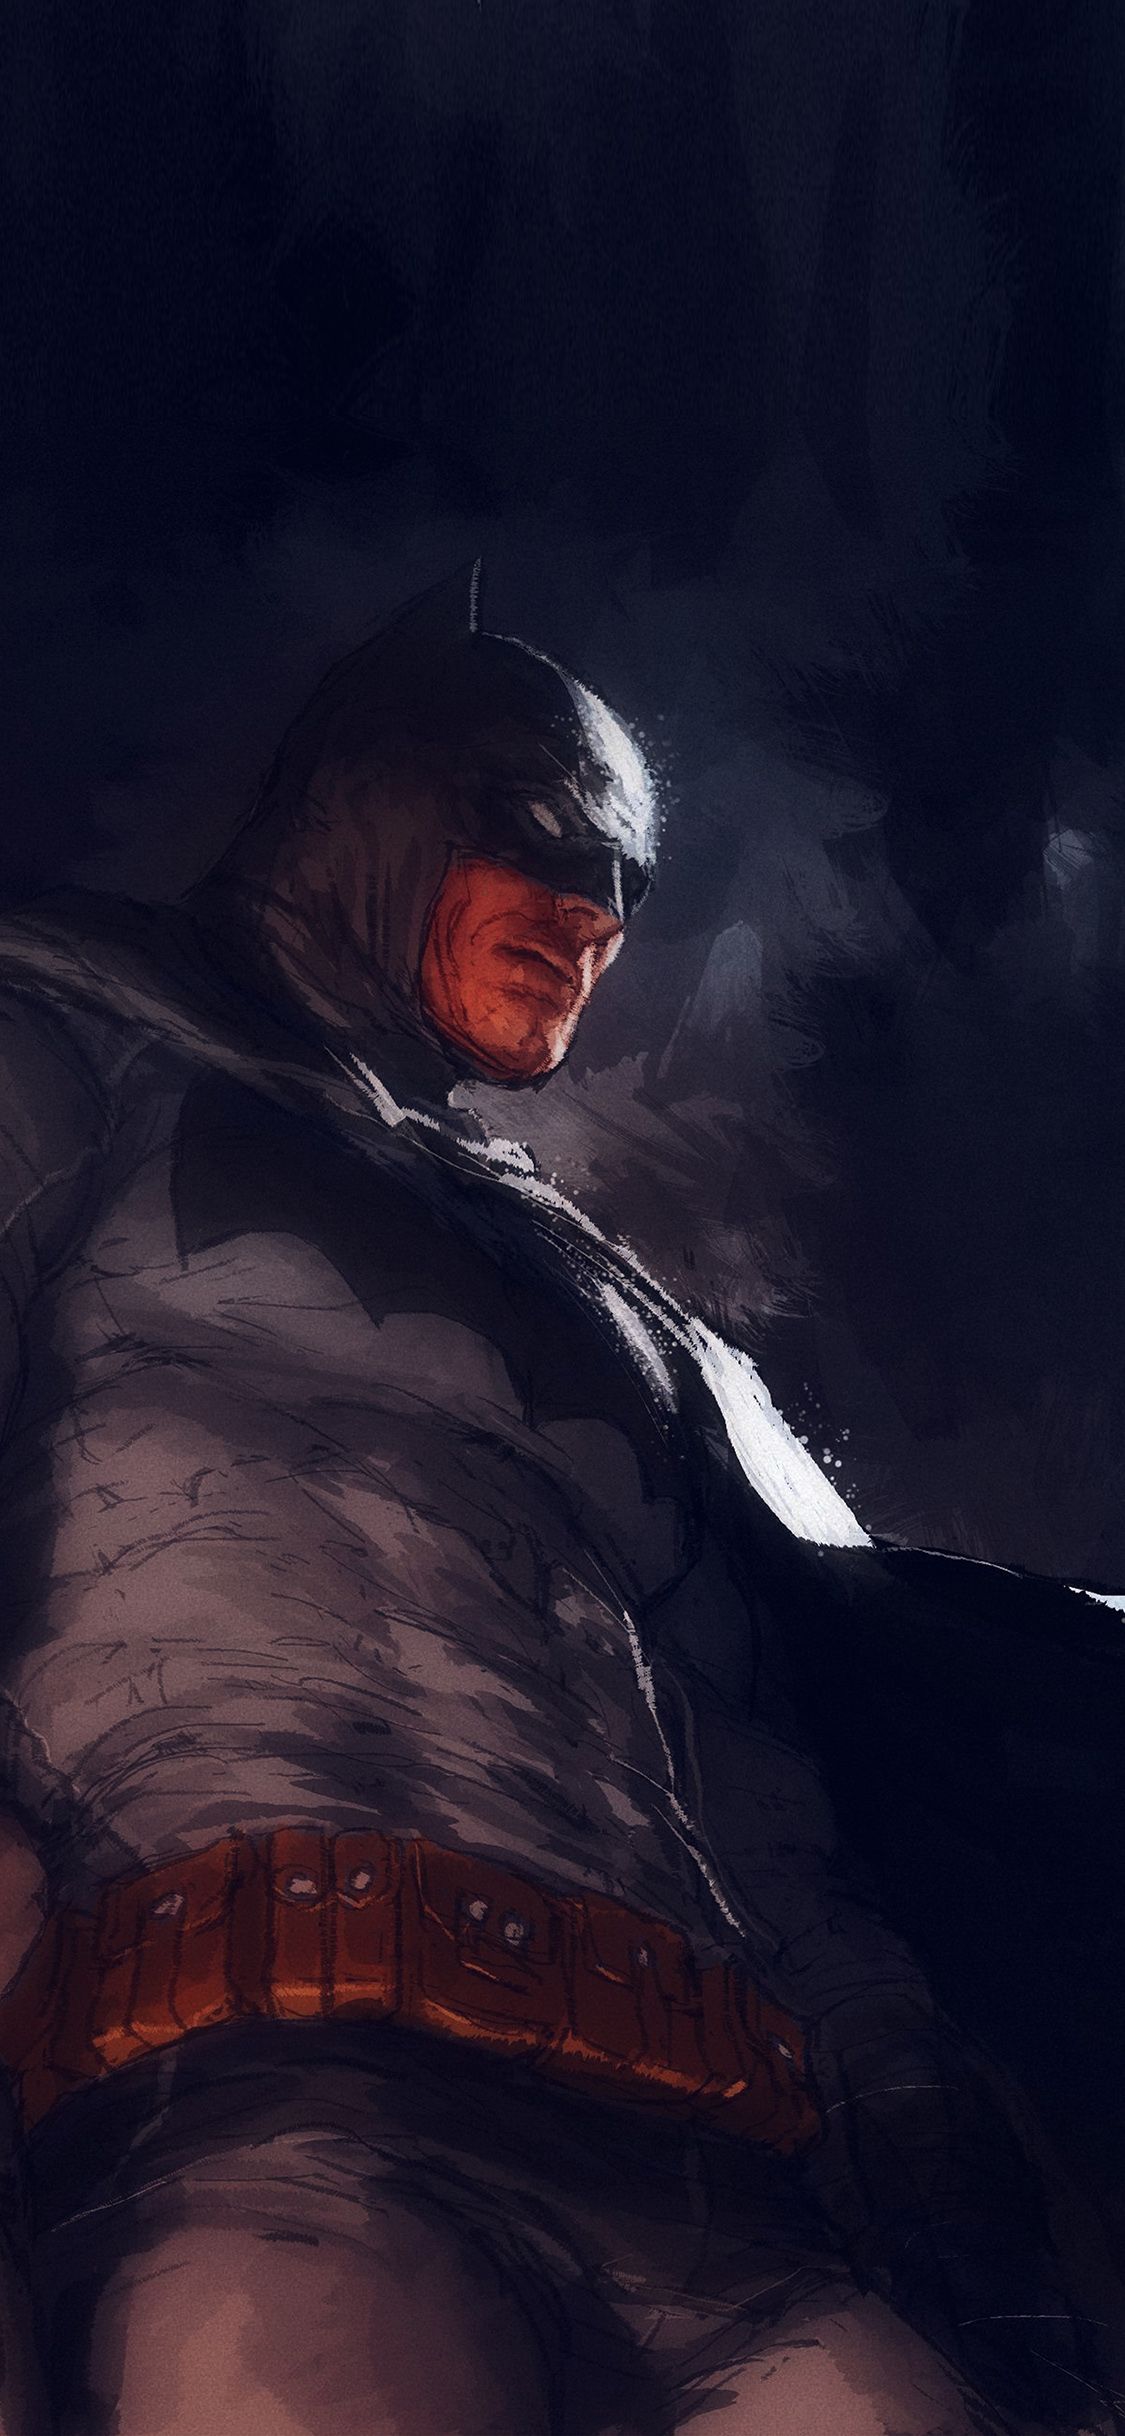 iPhone wallpaper. batman art illustration